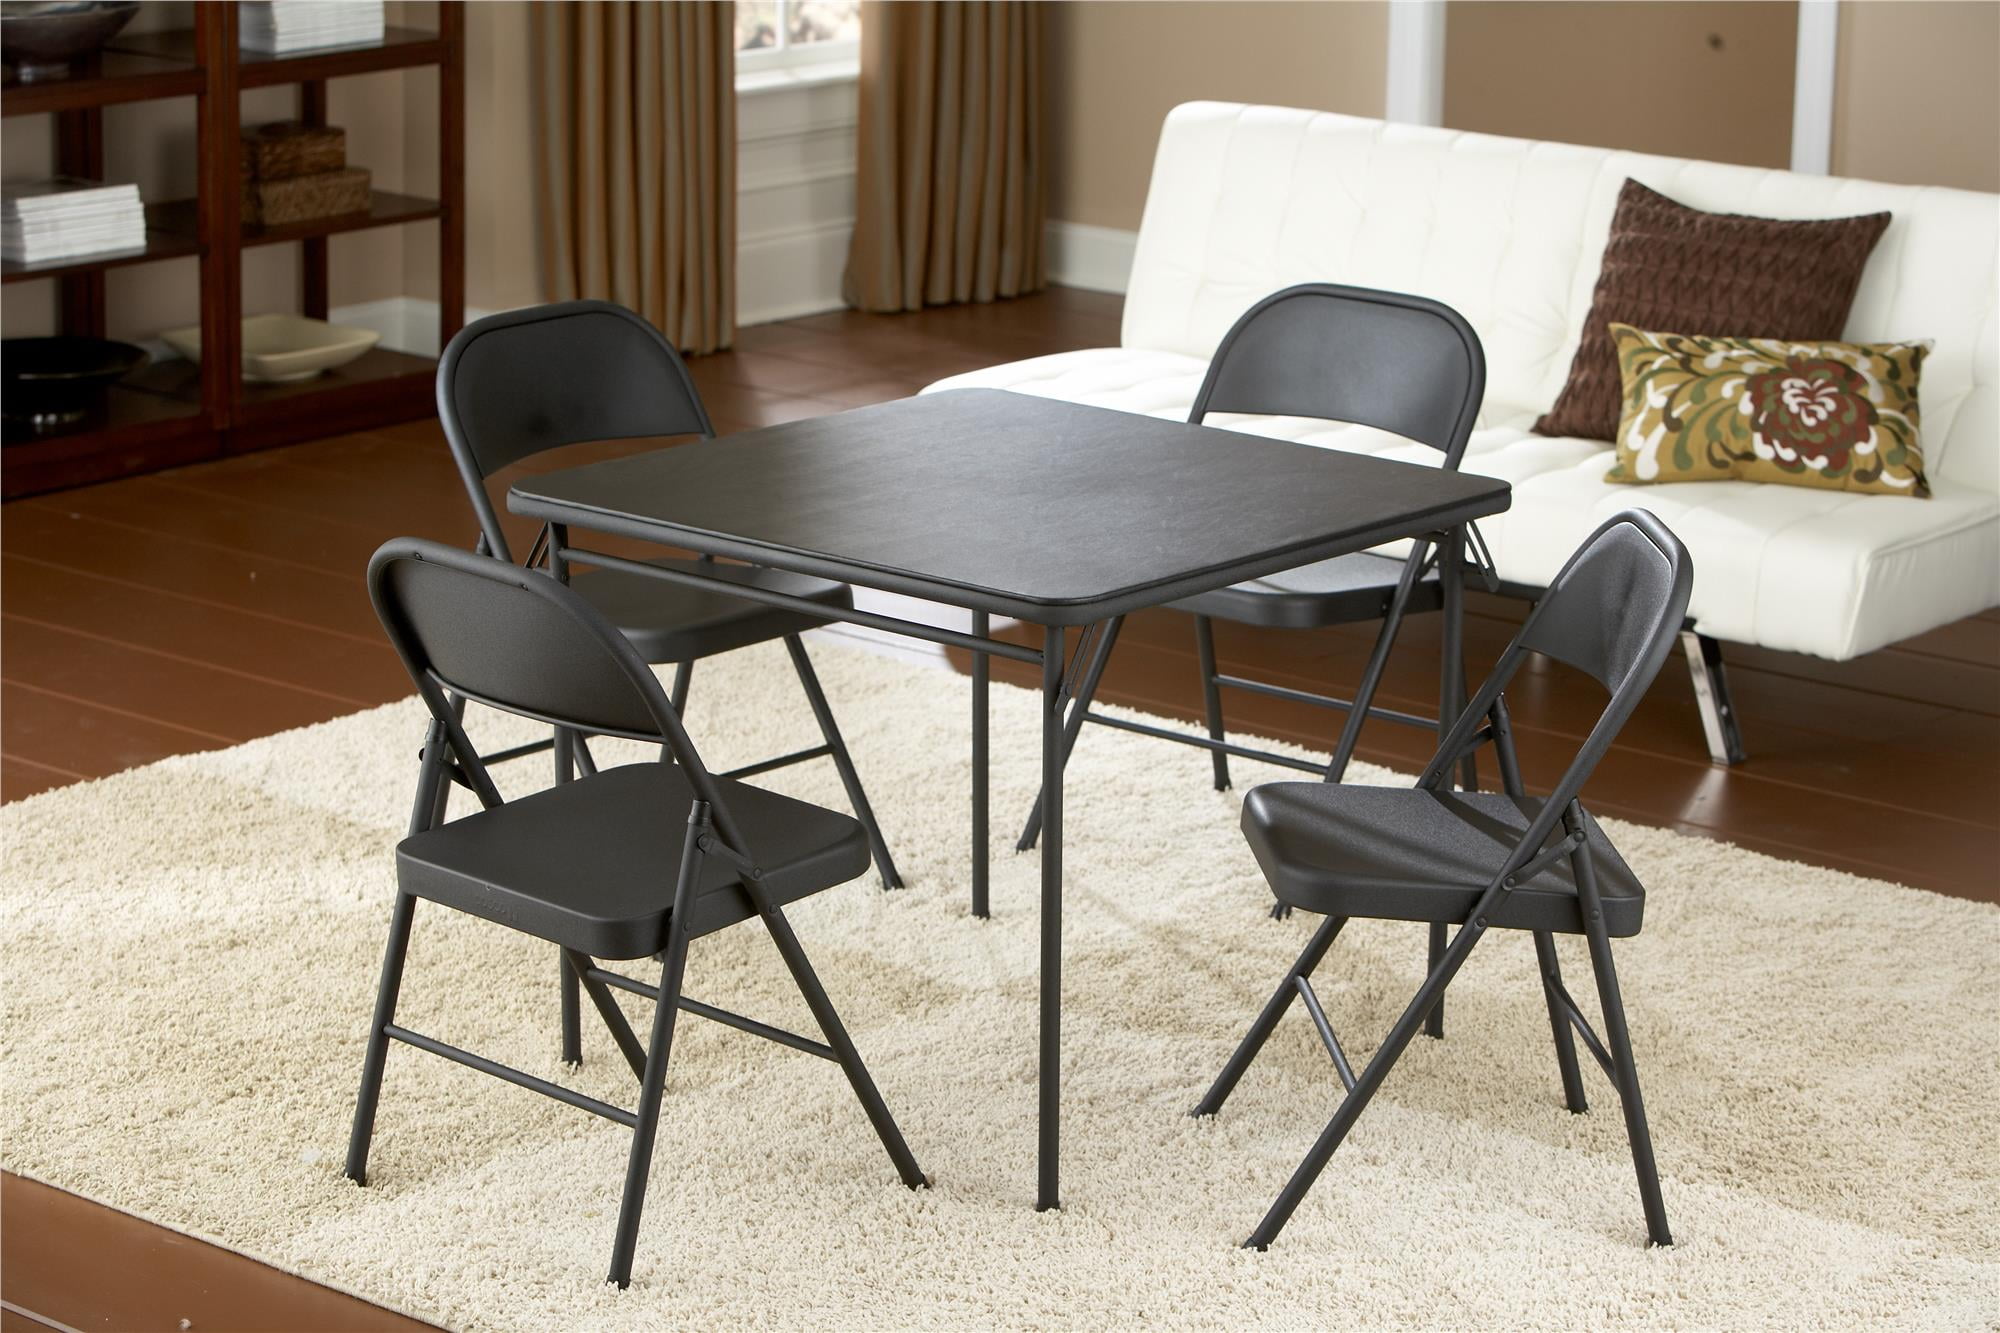 Mainstays Steel Folding Chair (4 Pack), Black - 1